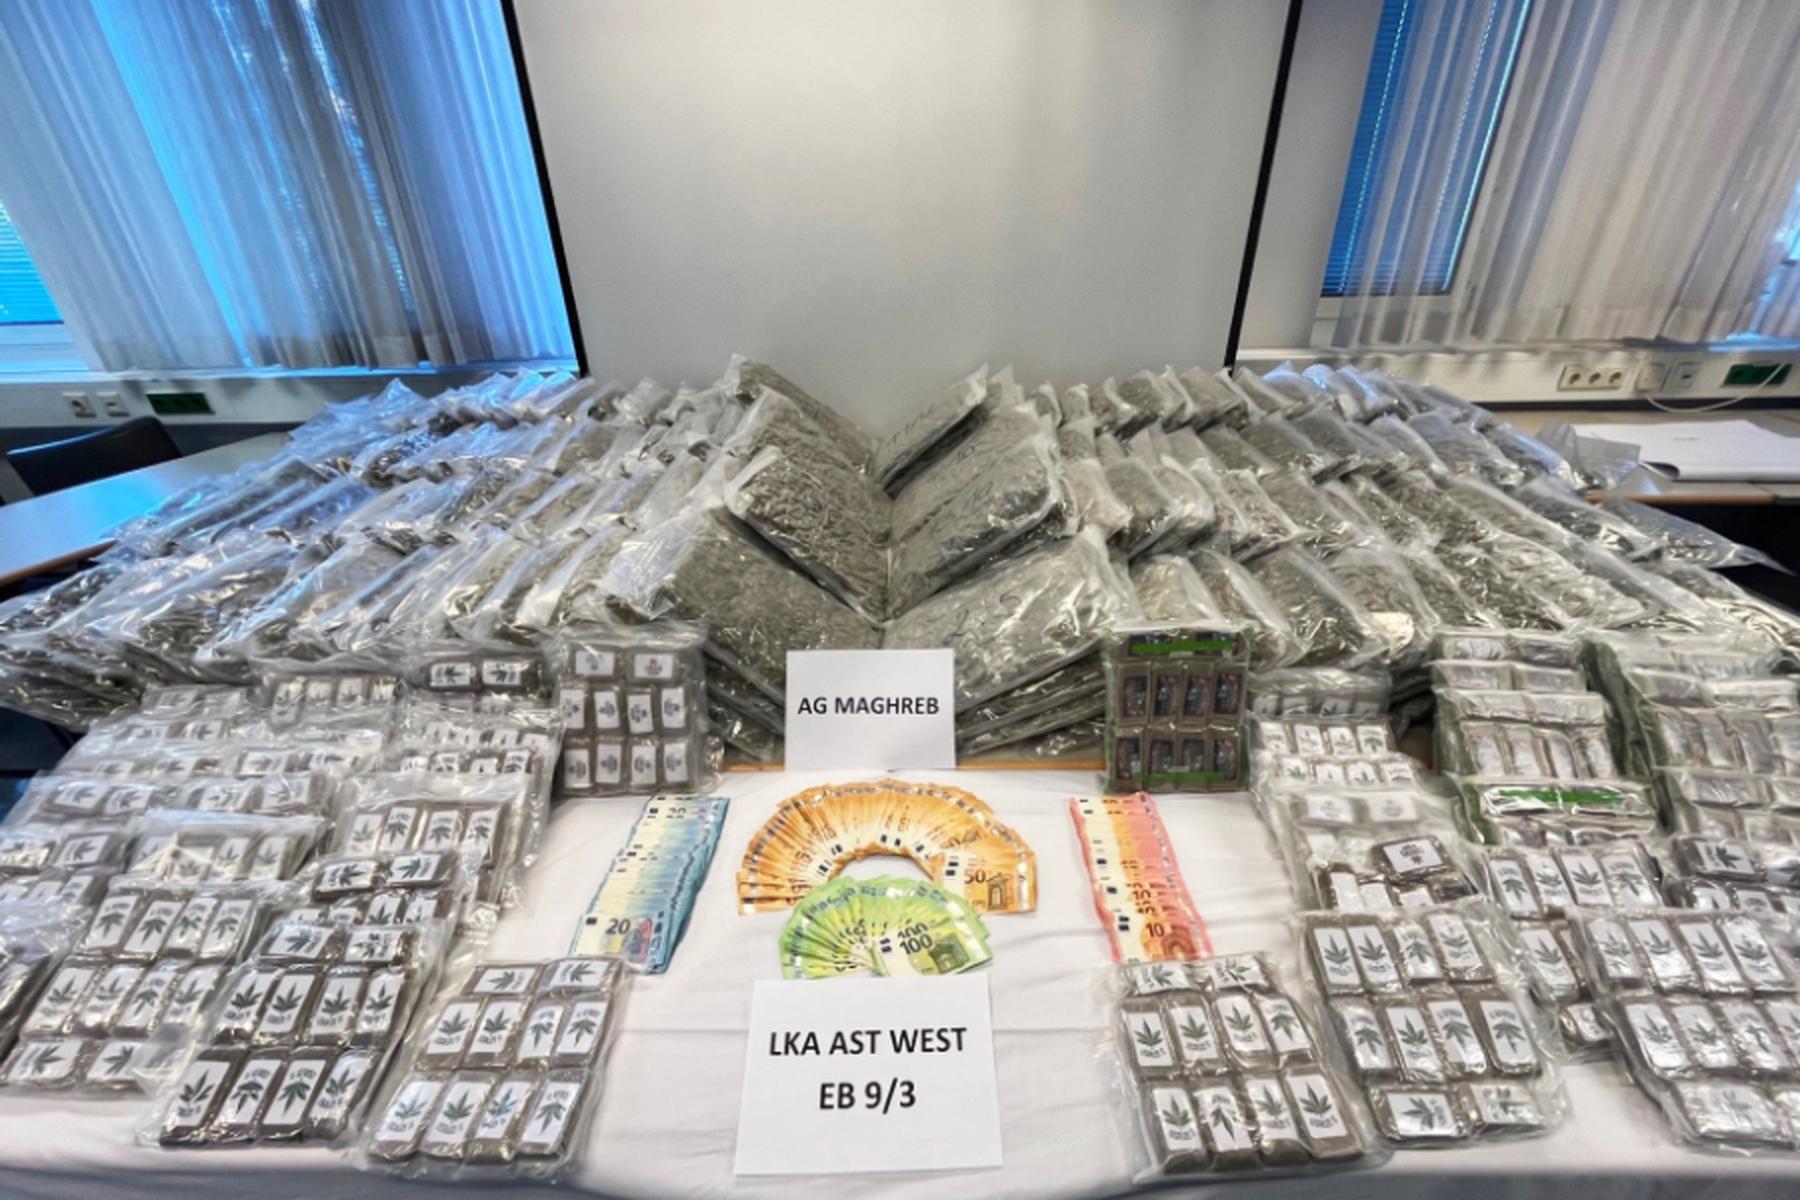 Wien: 171 Kilogramm Cannabisprodukte in Fahrzeug in Wien gefunden